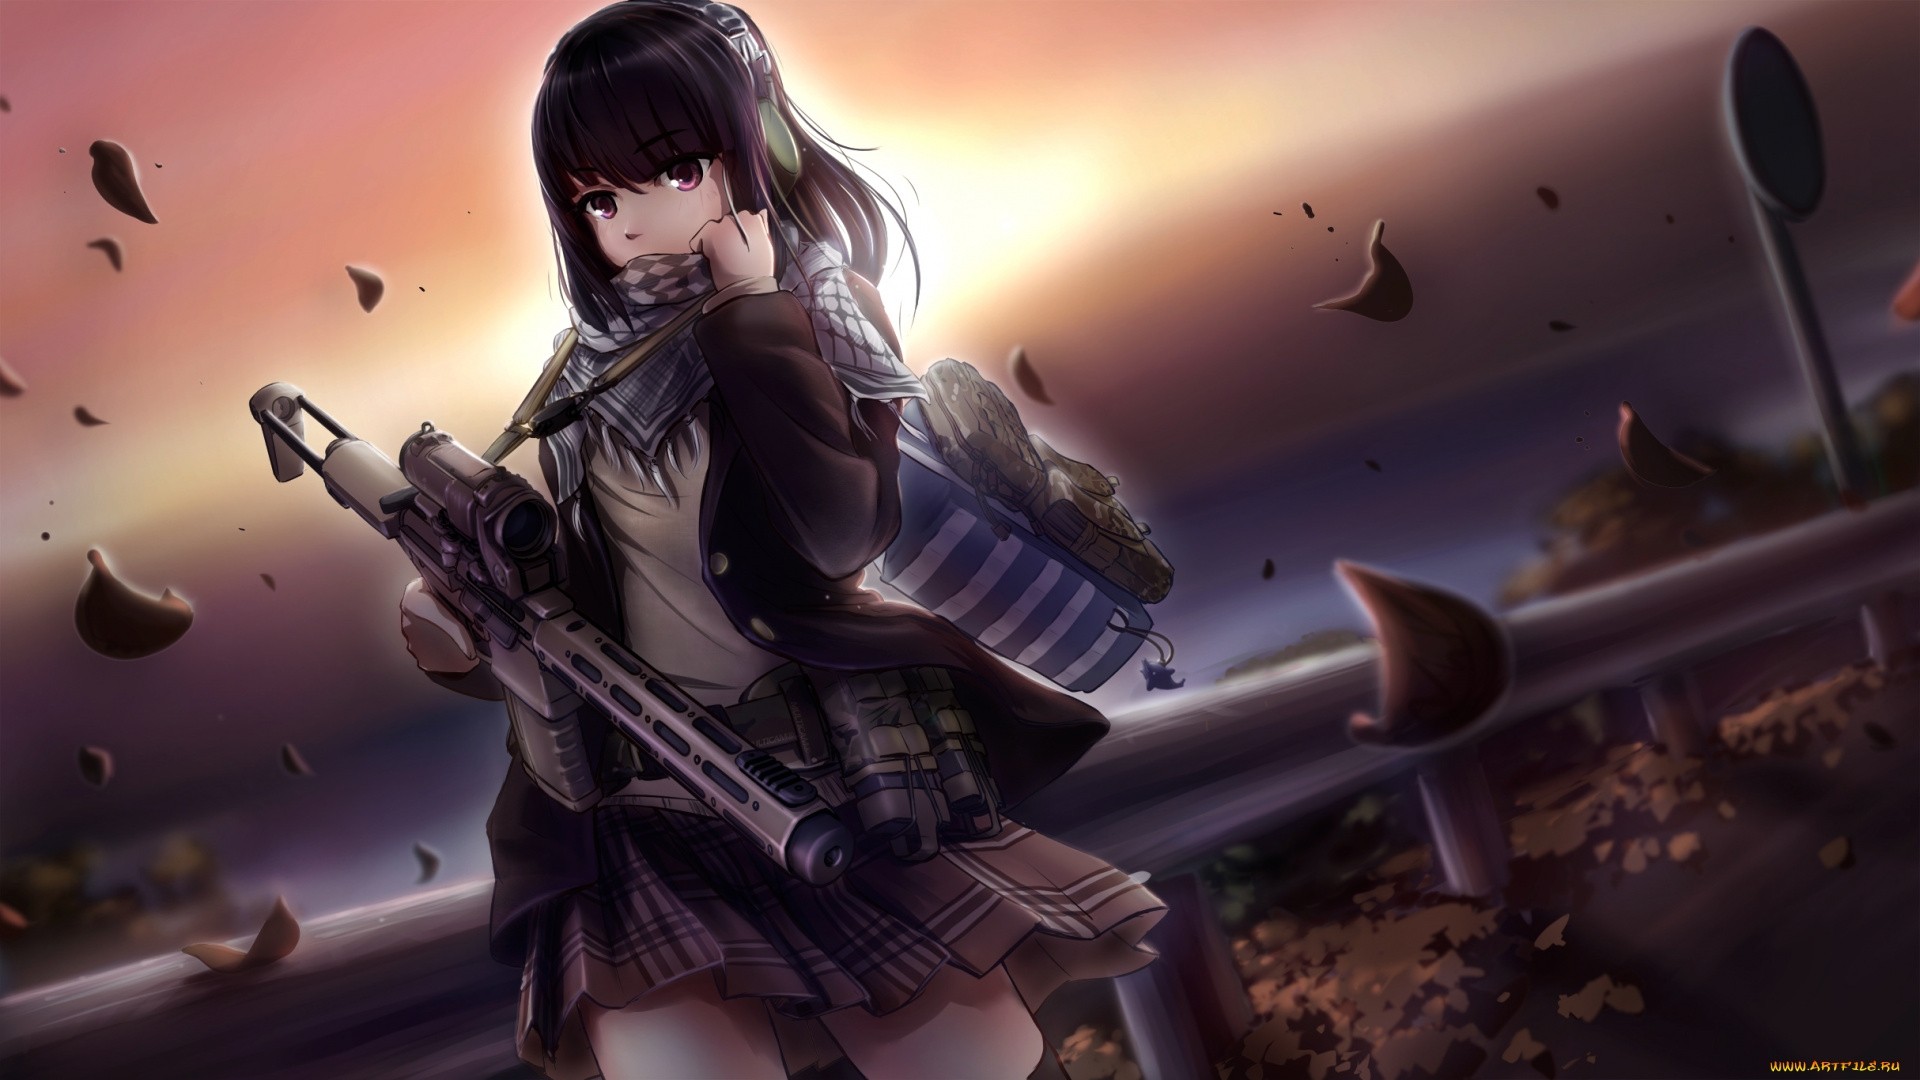 Anime Girls With Guns Wallpaper Pic